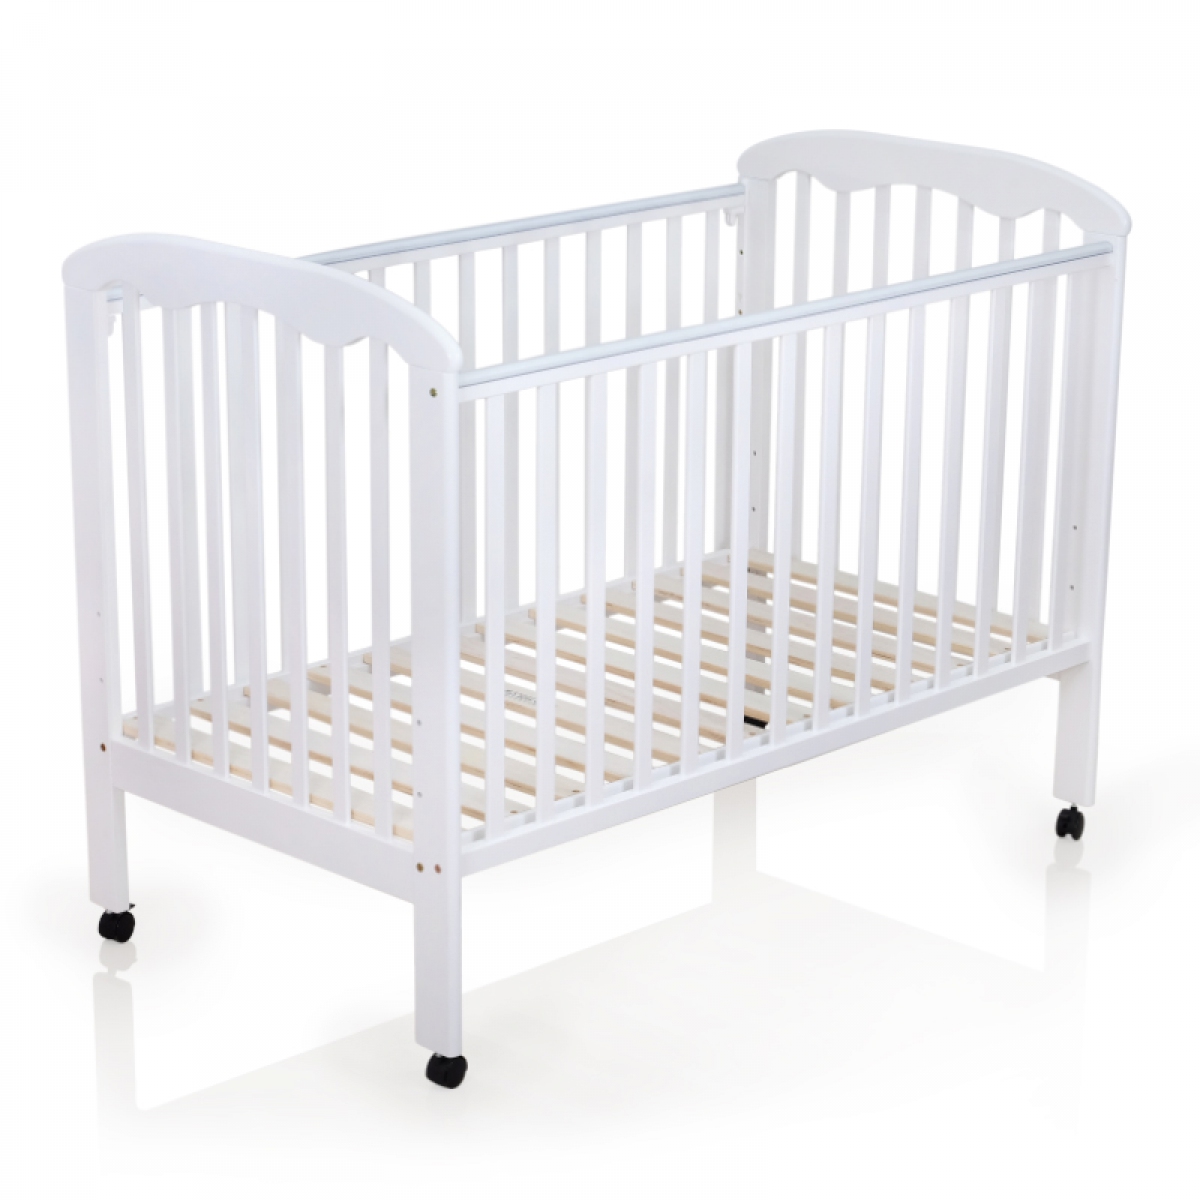 Crib Playpen Crib Infant Furniture Playpen Baby Cot